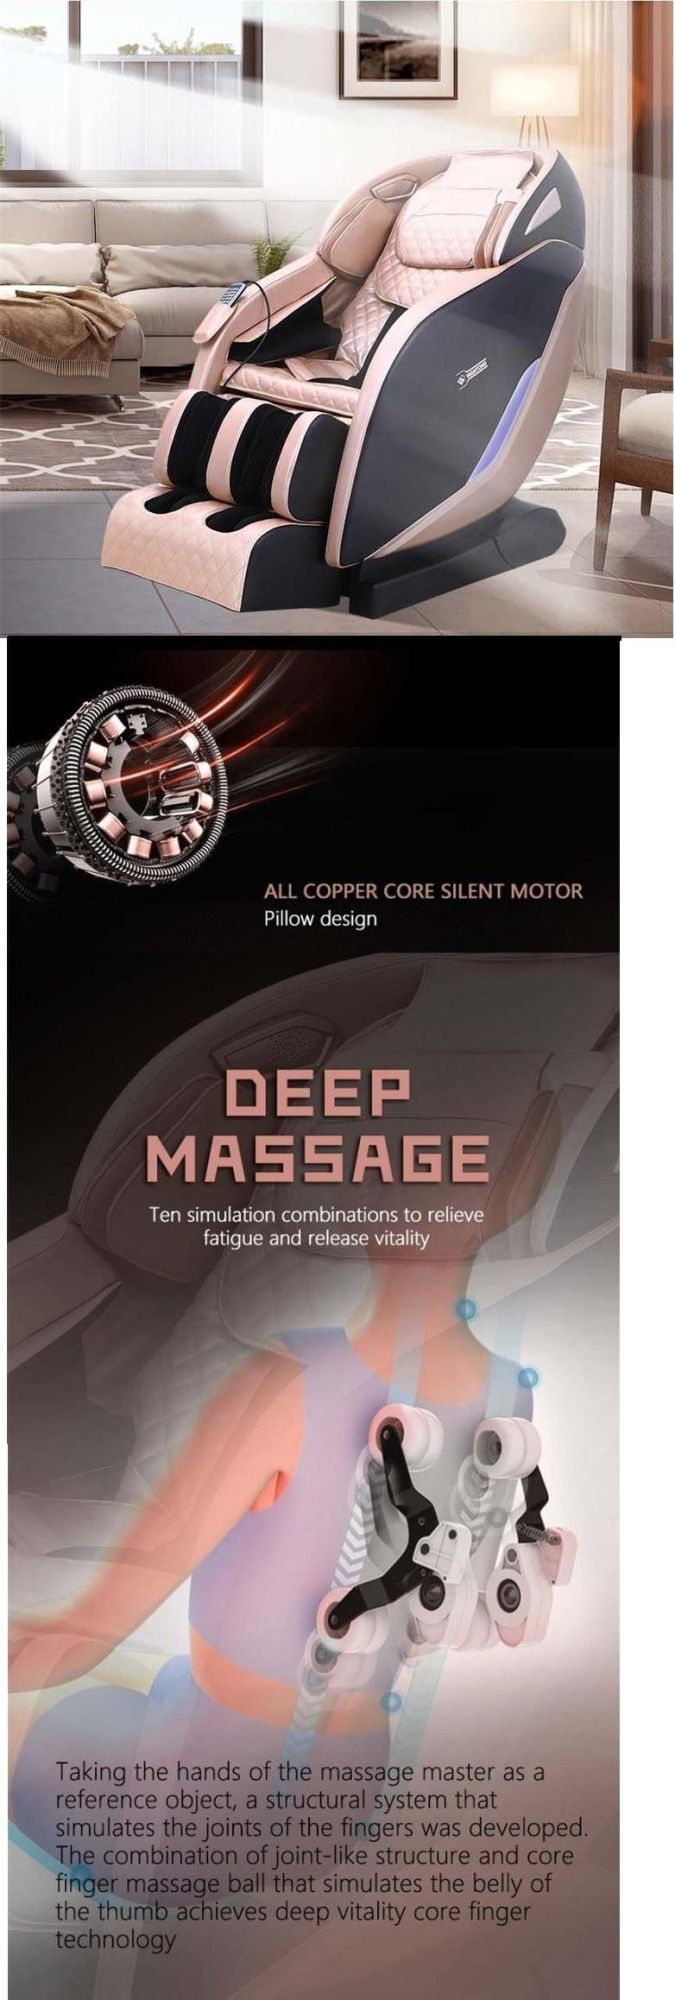 Best 2021 Massage Chair Zero Gravity Recliner Full Body with Shiatsu Kneading Heating Vibrating Massage Chair